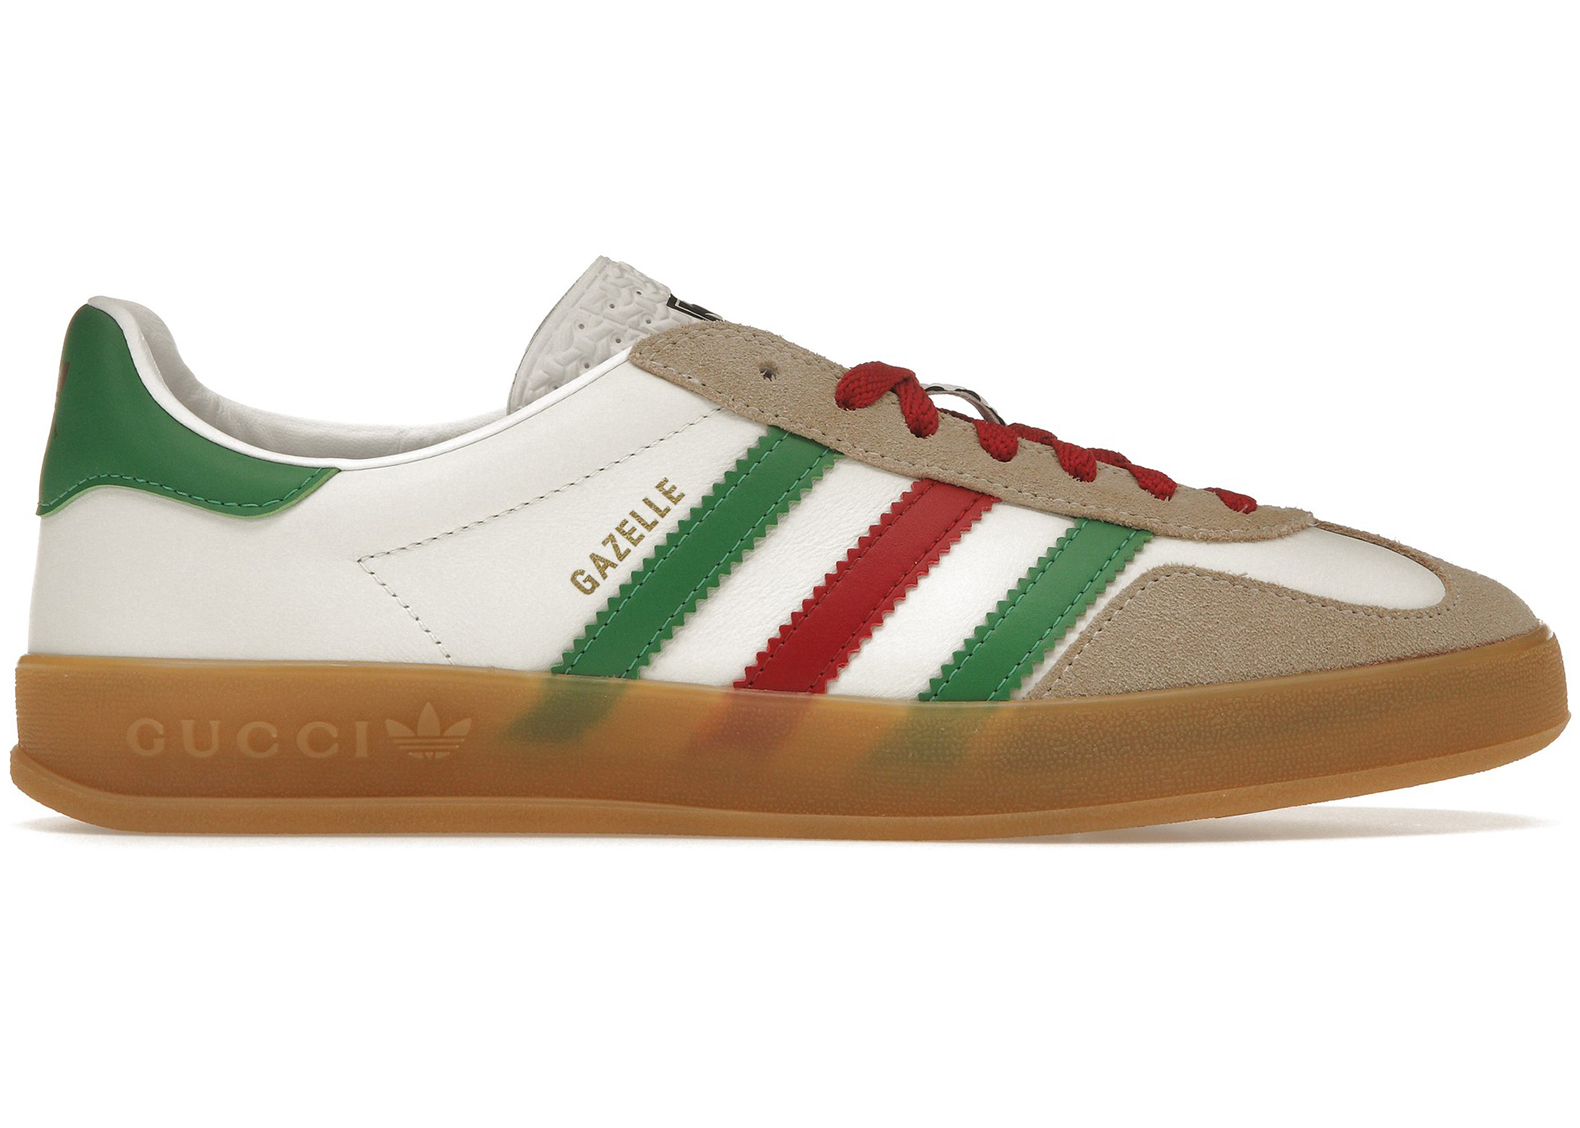 adidas x Gucci Gazelle White Green Red (Women's) - 726488 